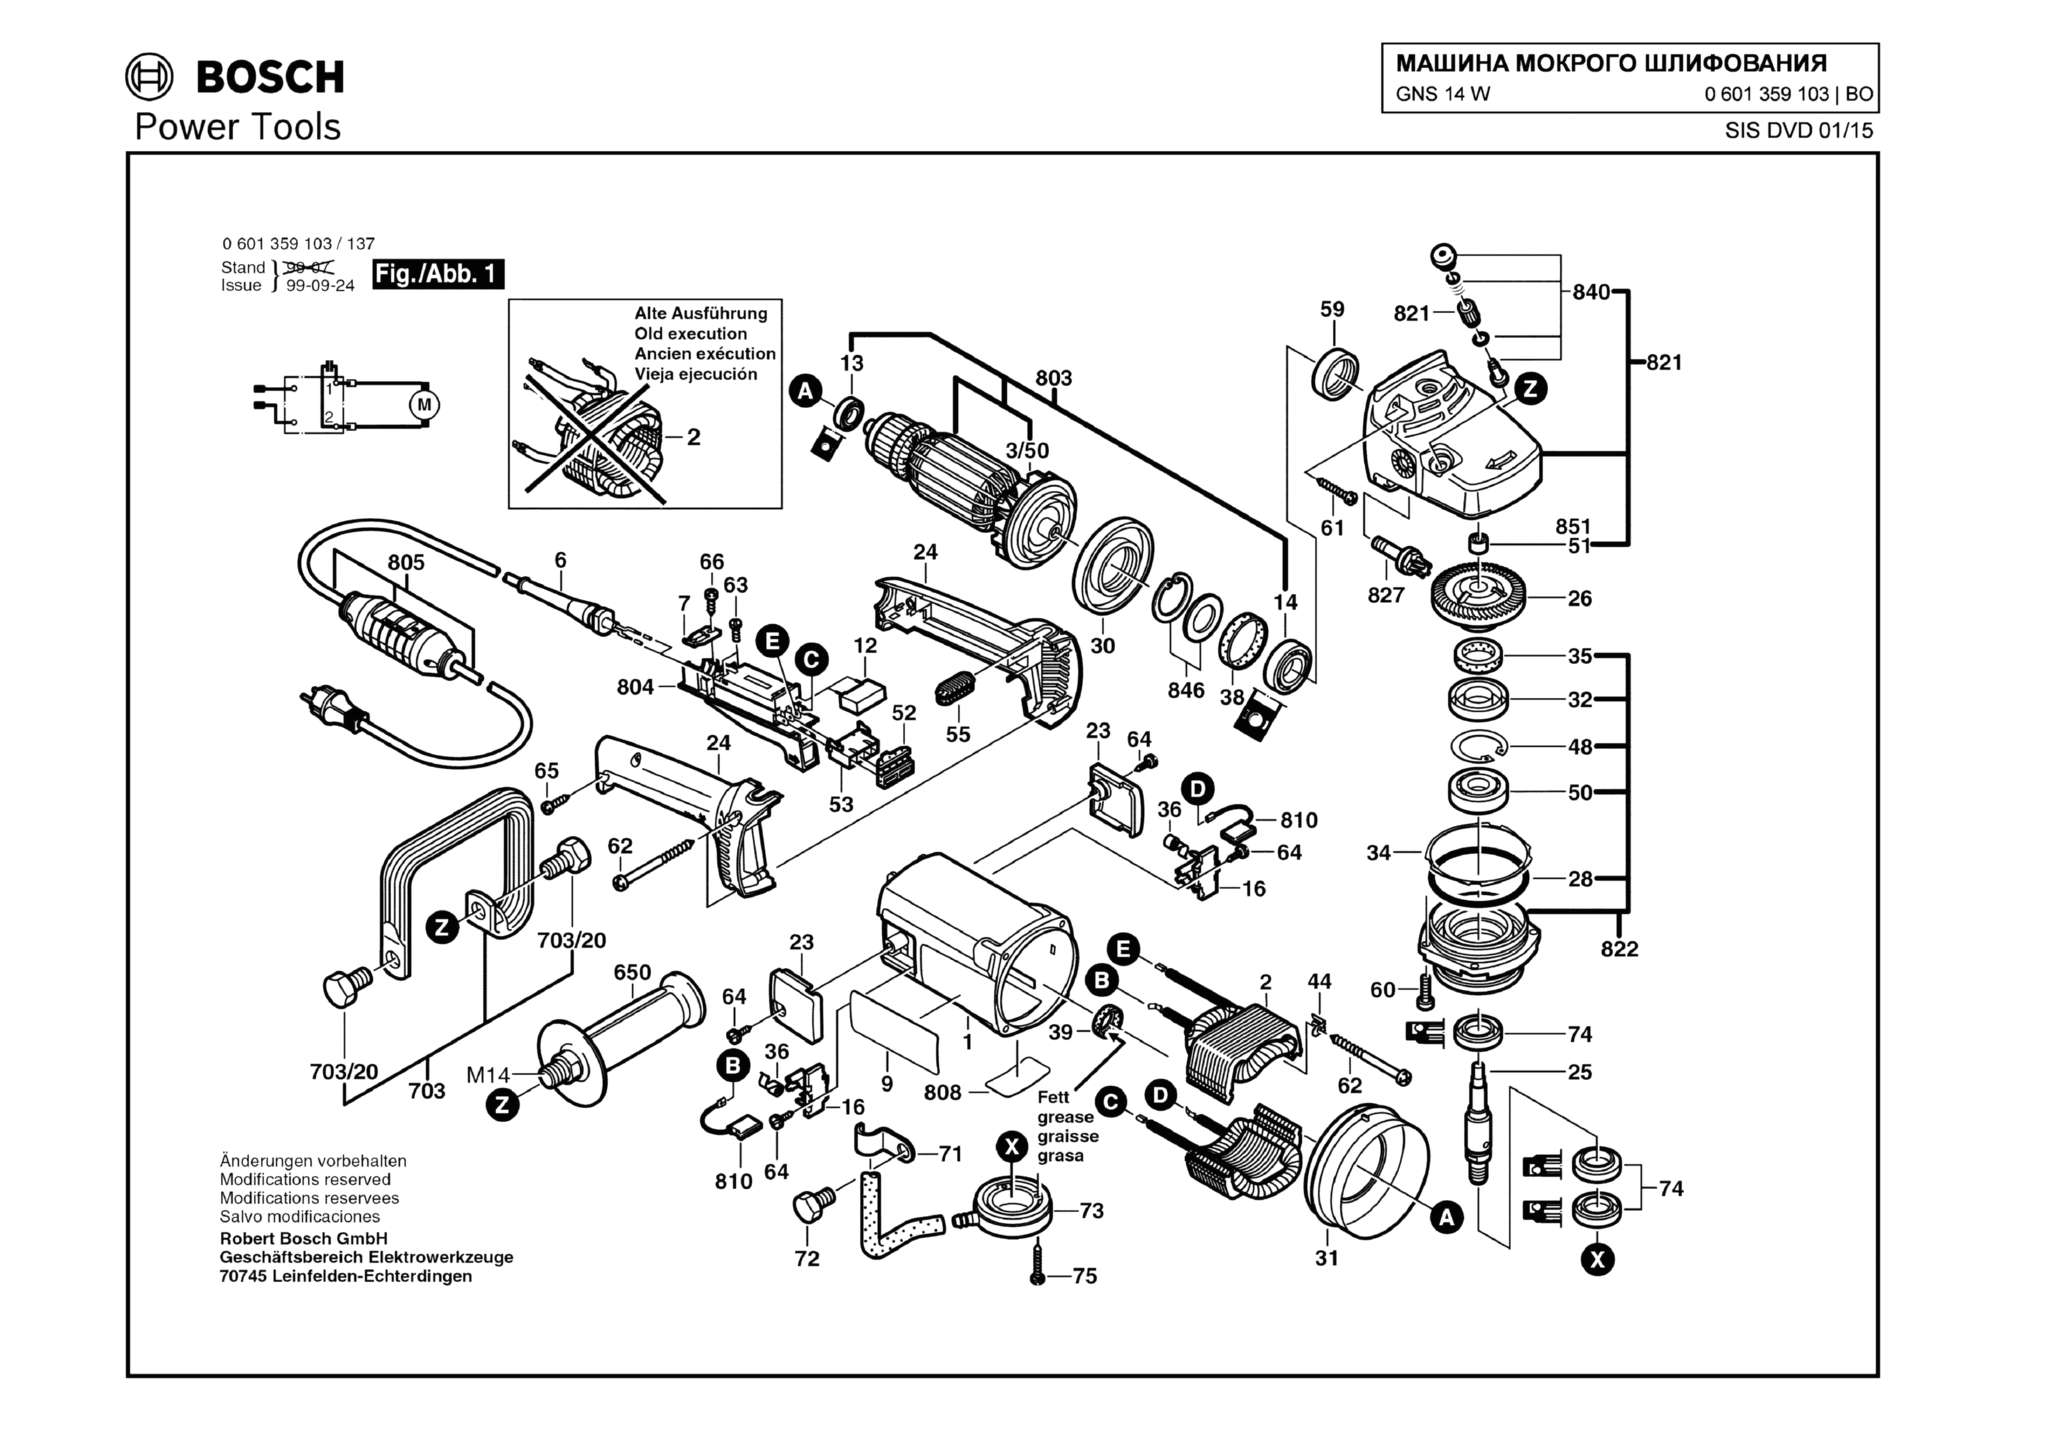 Запчасти, схема и деталировка Bosch GNS 14 W (ТИП 0601359103)